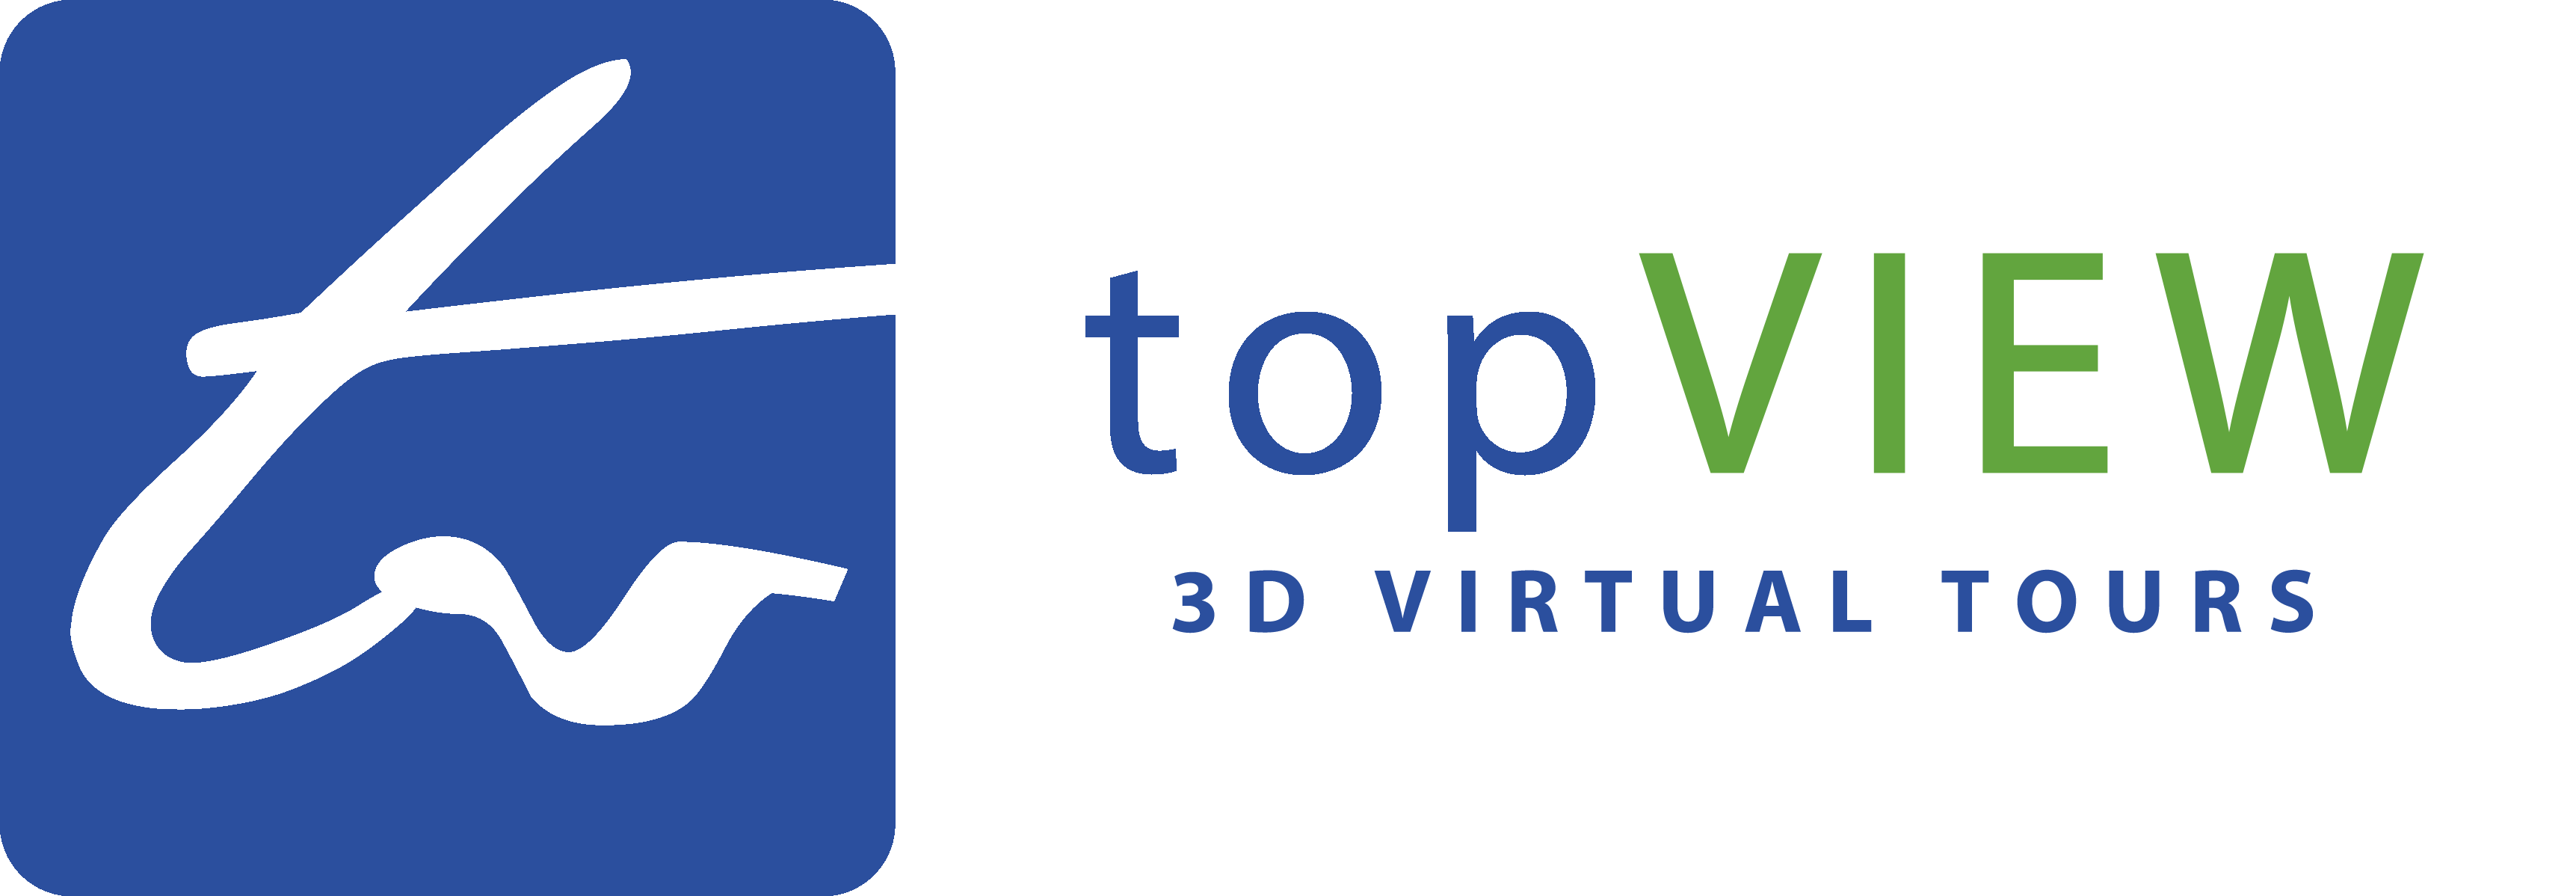 topVIEW logo